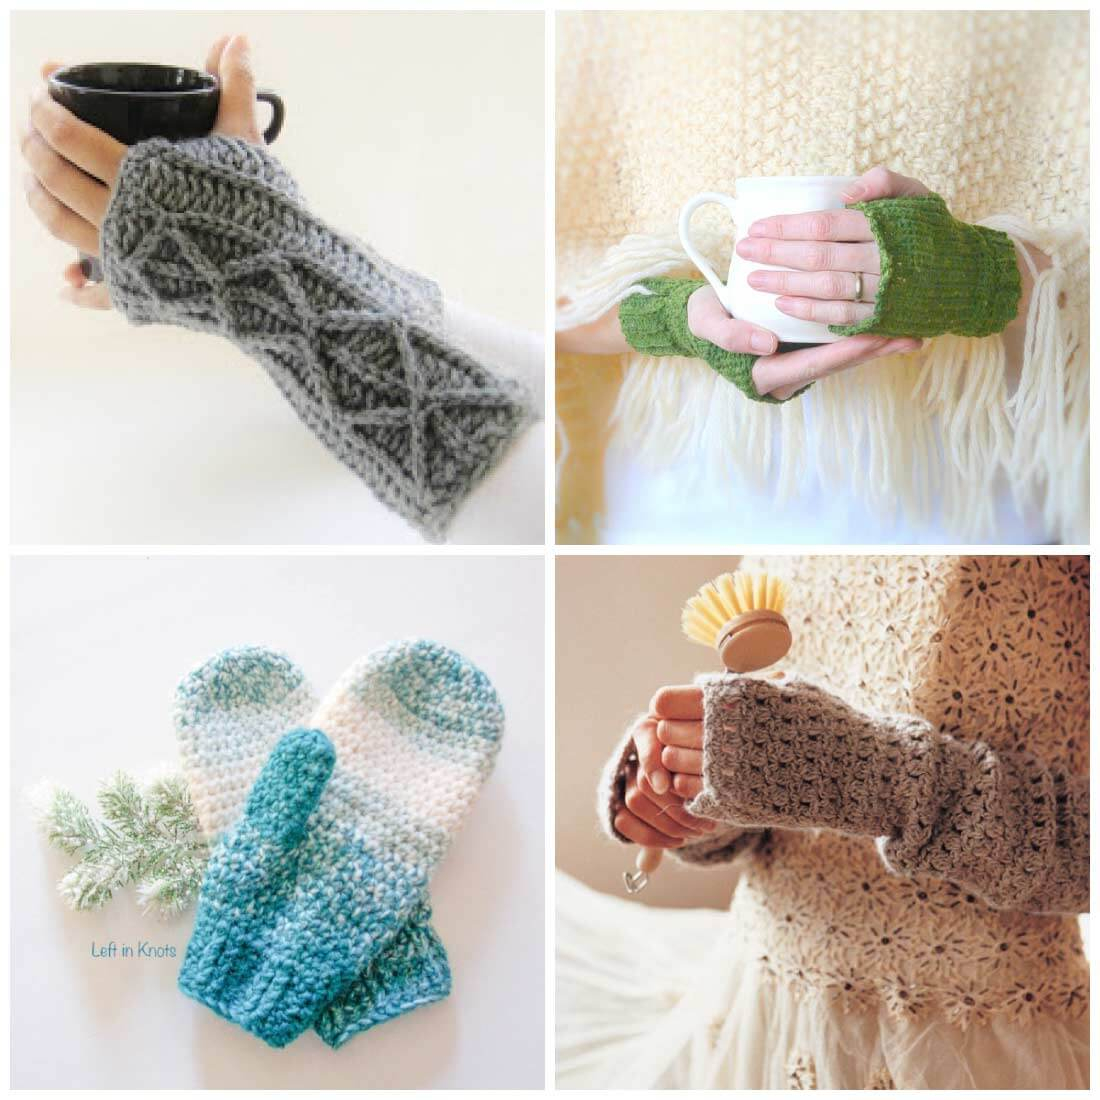 Free Crochet Pattern Hand Warmers Crochet Fingerless Gloves Mitten Crochet Patterns Daisy Cottage